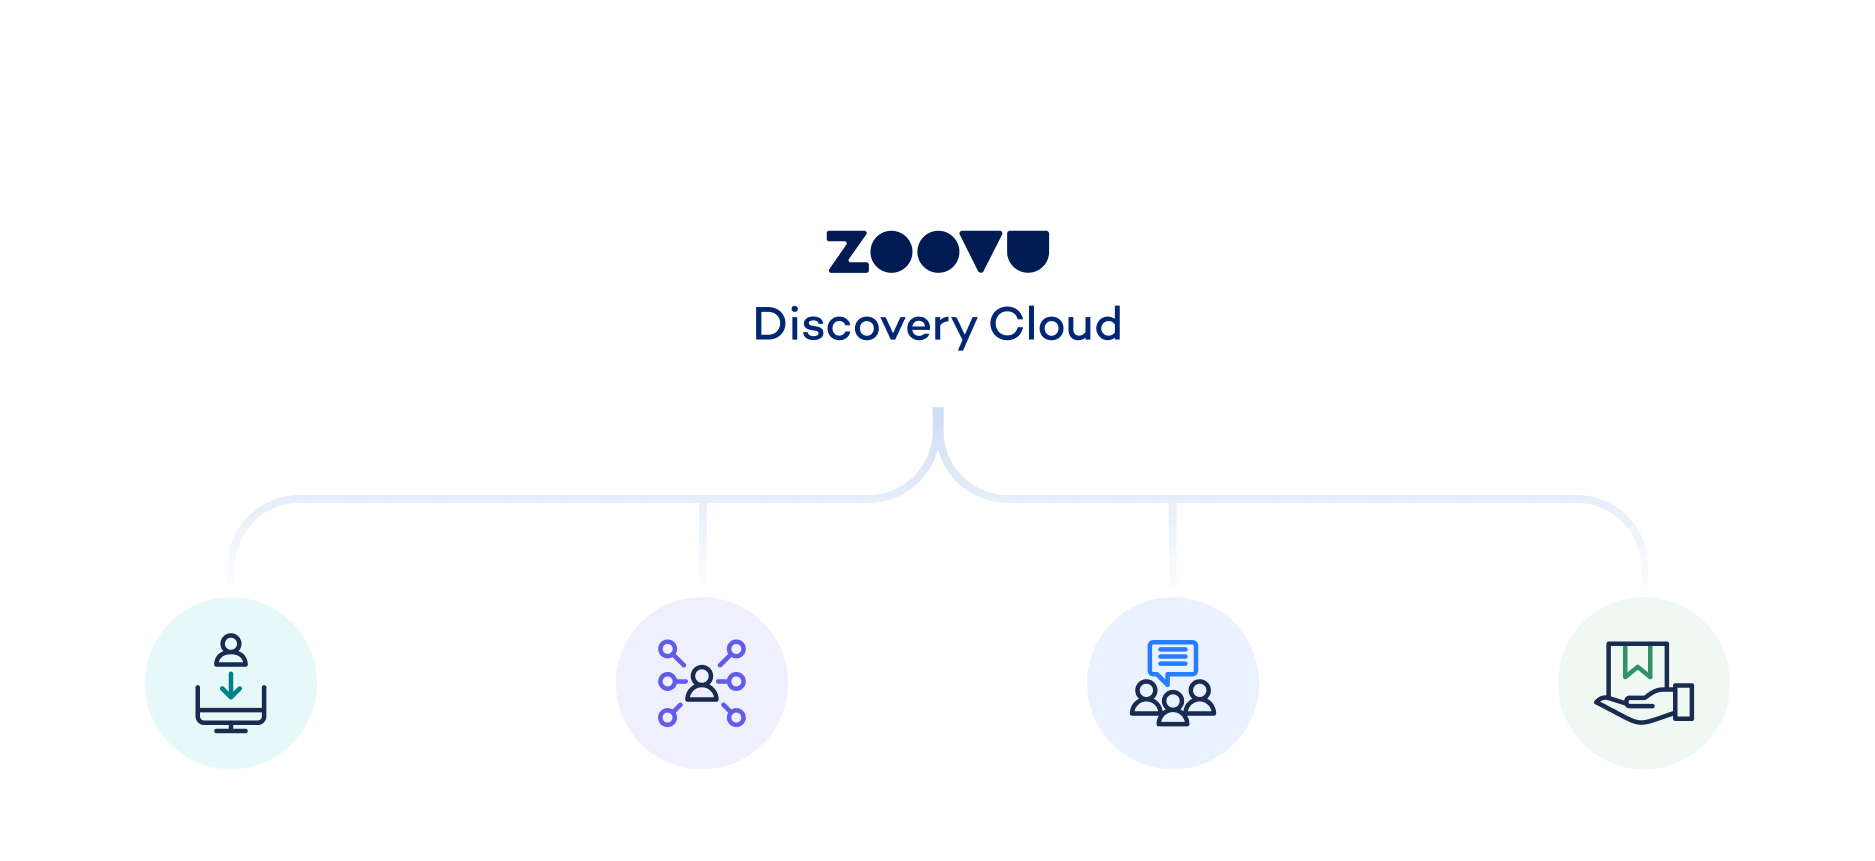 zoovu-discovery-cloud-3-1